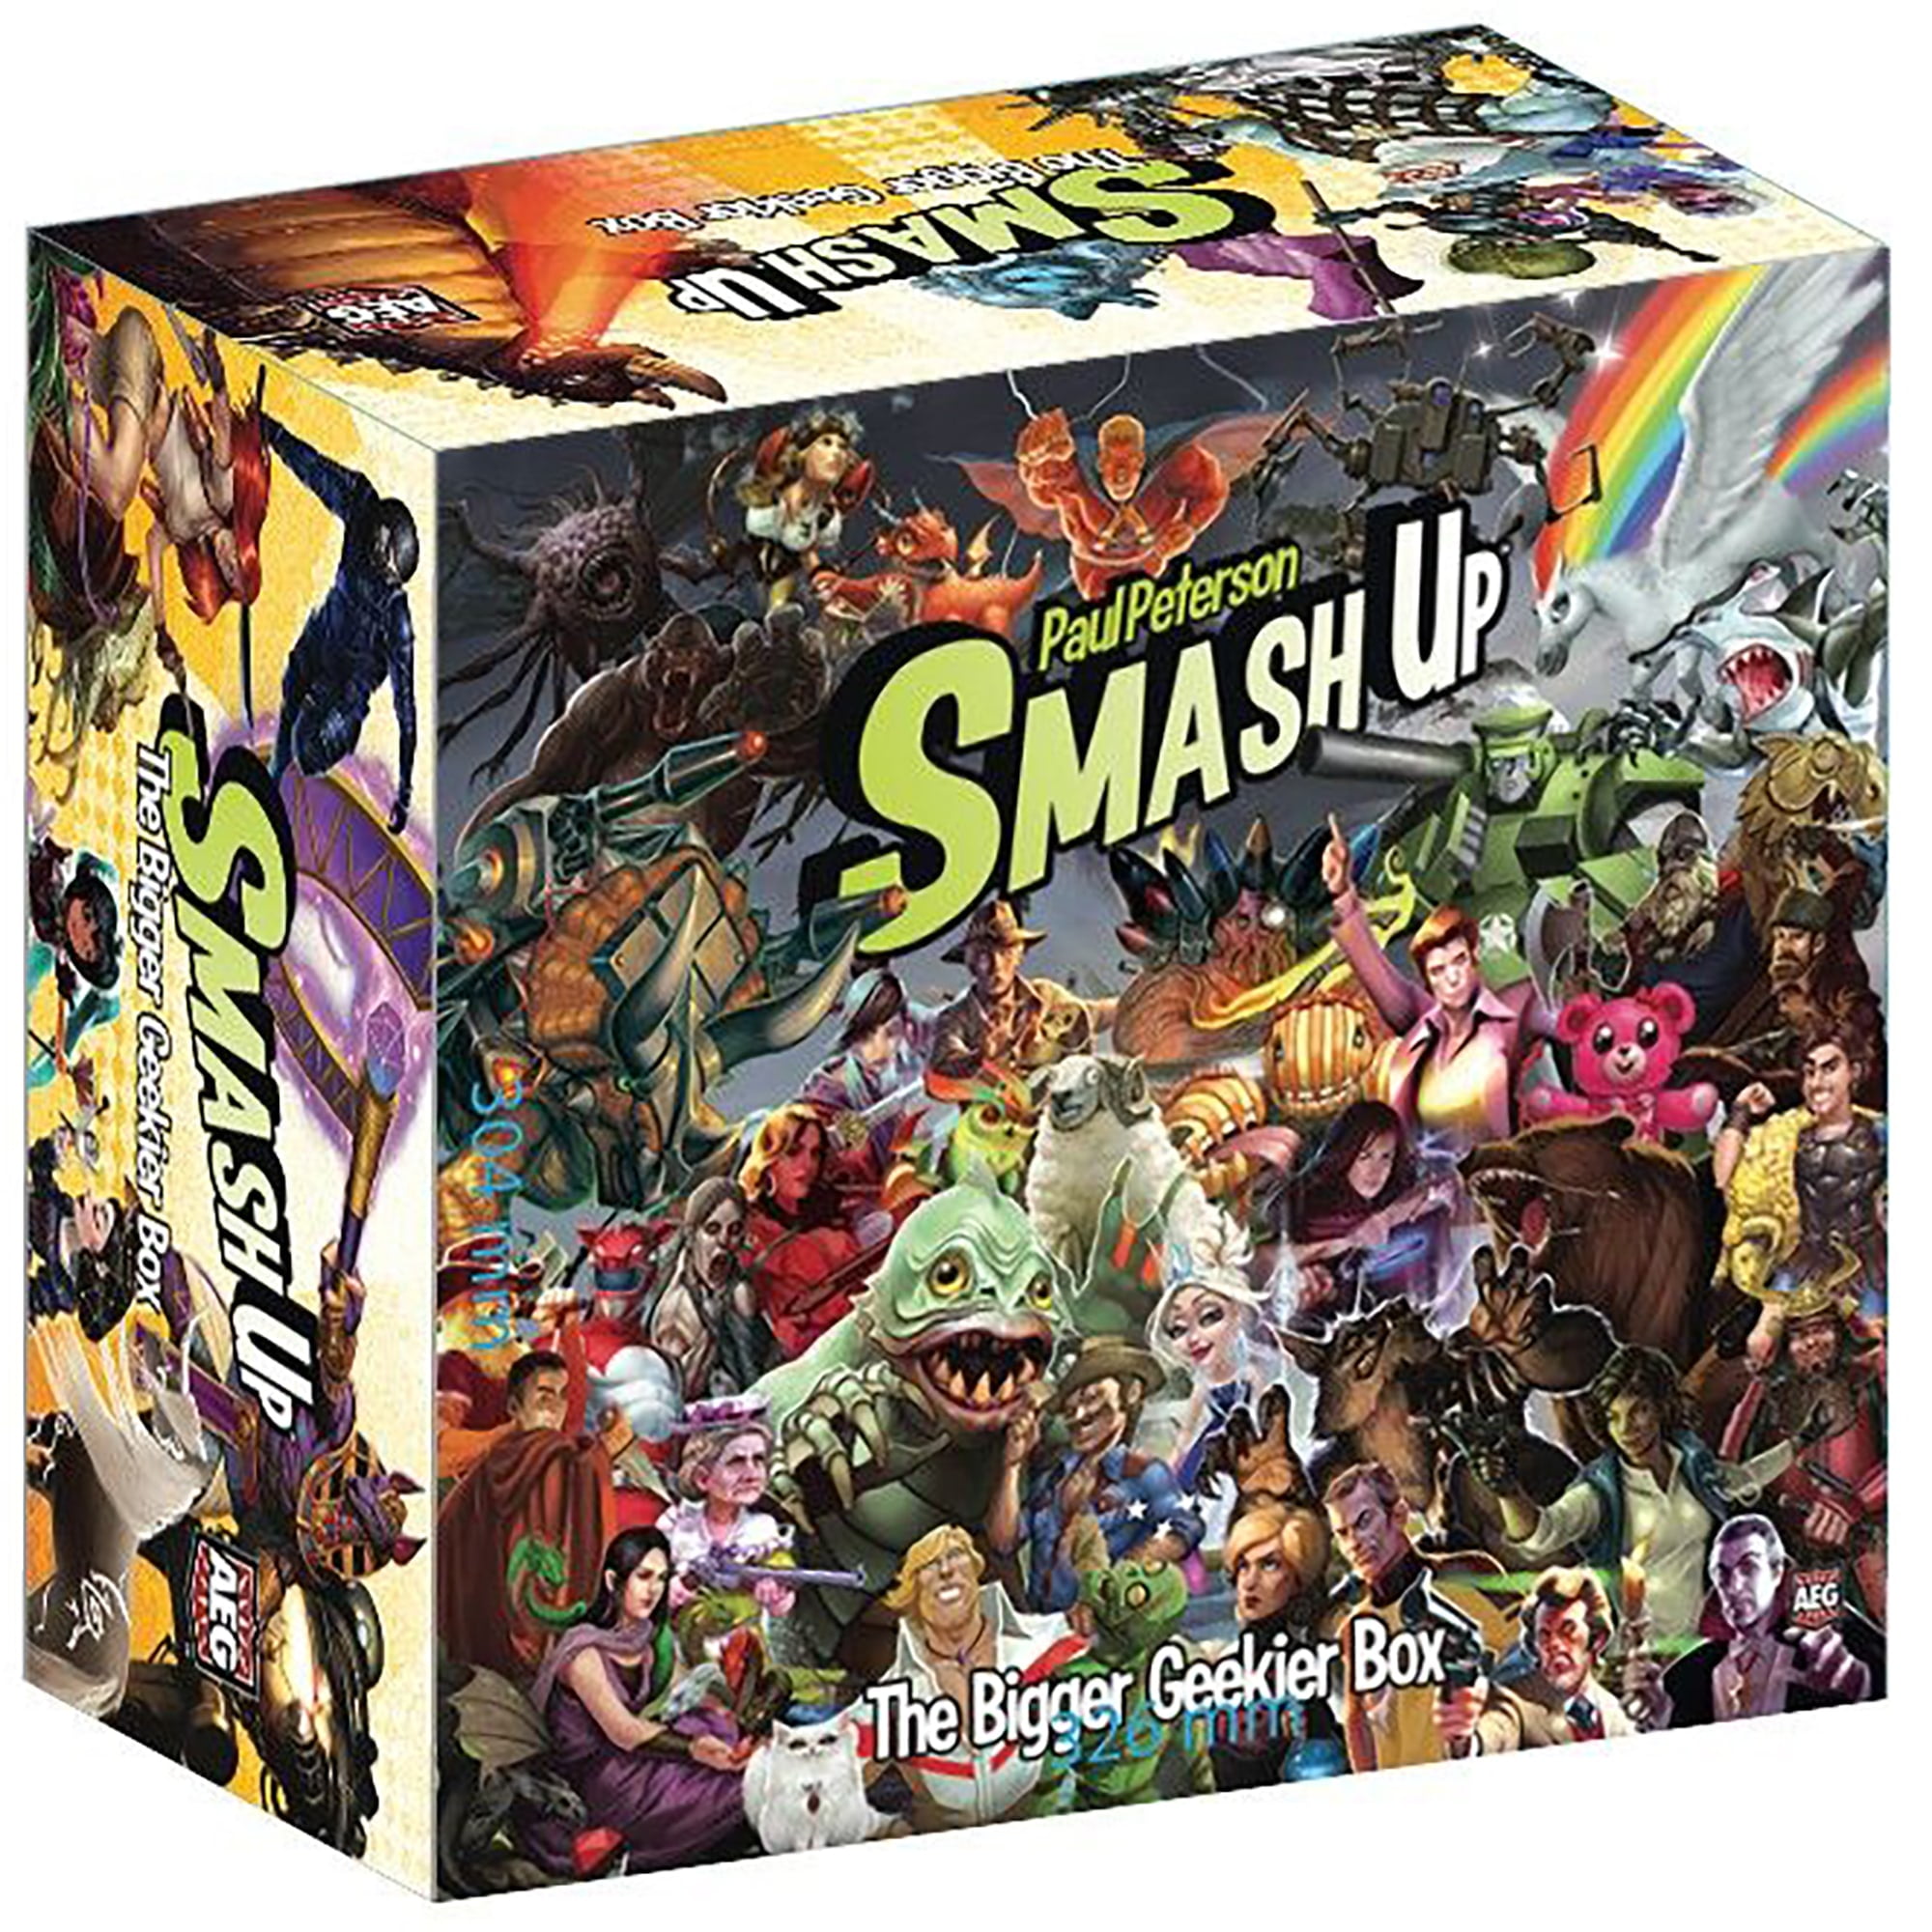 Aeg5515 Smash Up Card Game - The Bigger Geekier Box Expansion